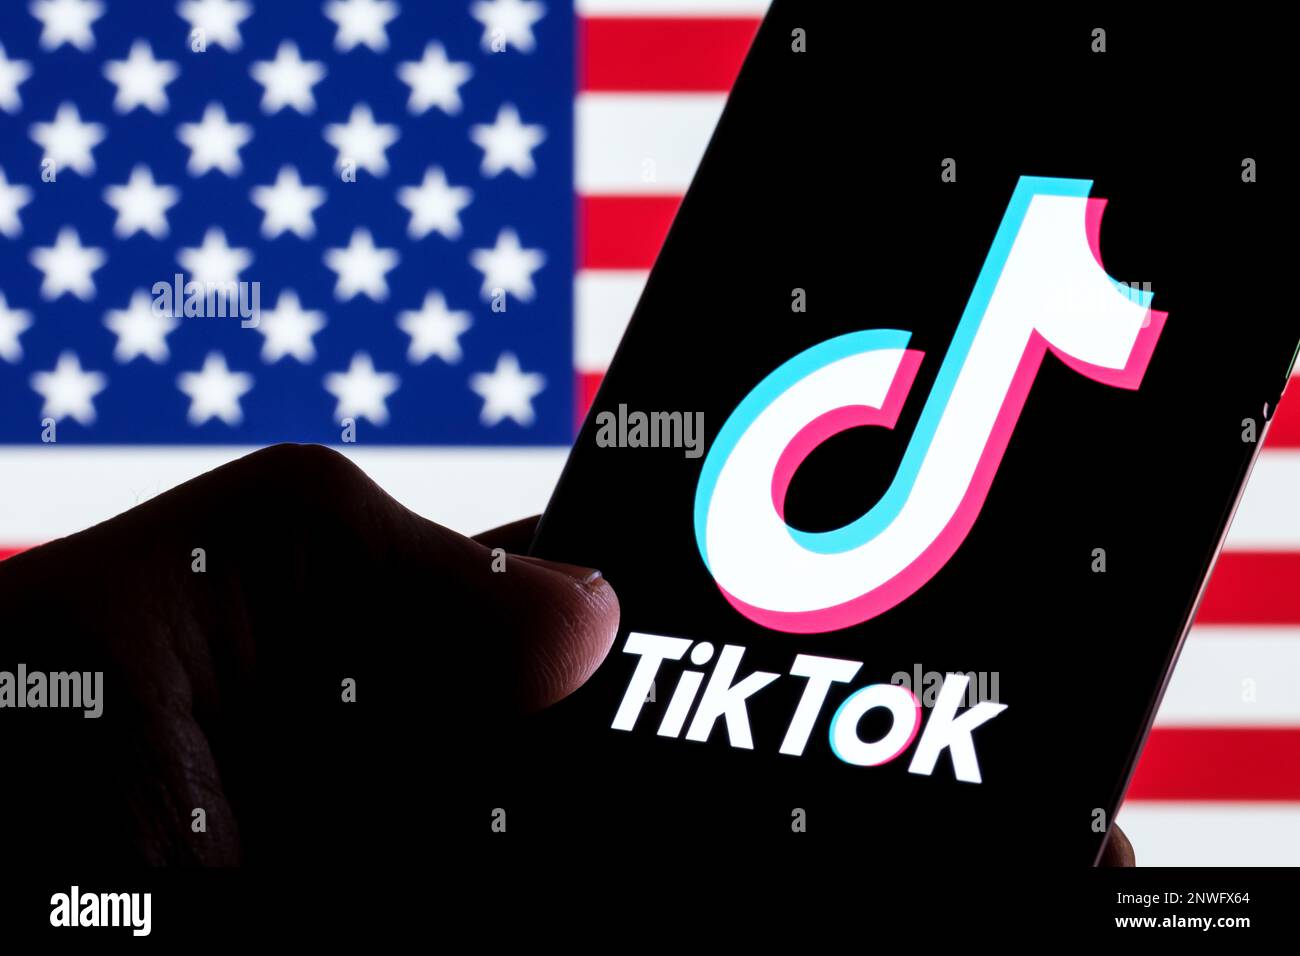 TikTok app logo seen on smartphone screen. U.S. US flag o the blurred background. Stafford, UK, February 28, 2023 Stock Photo